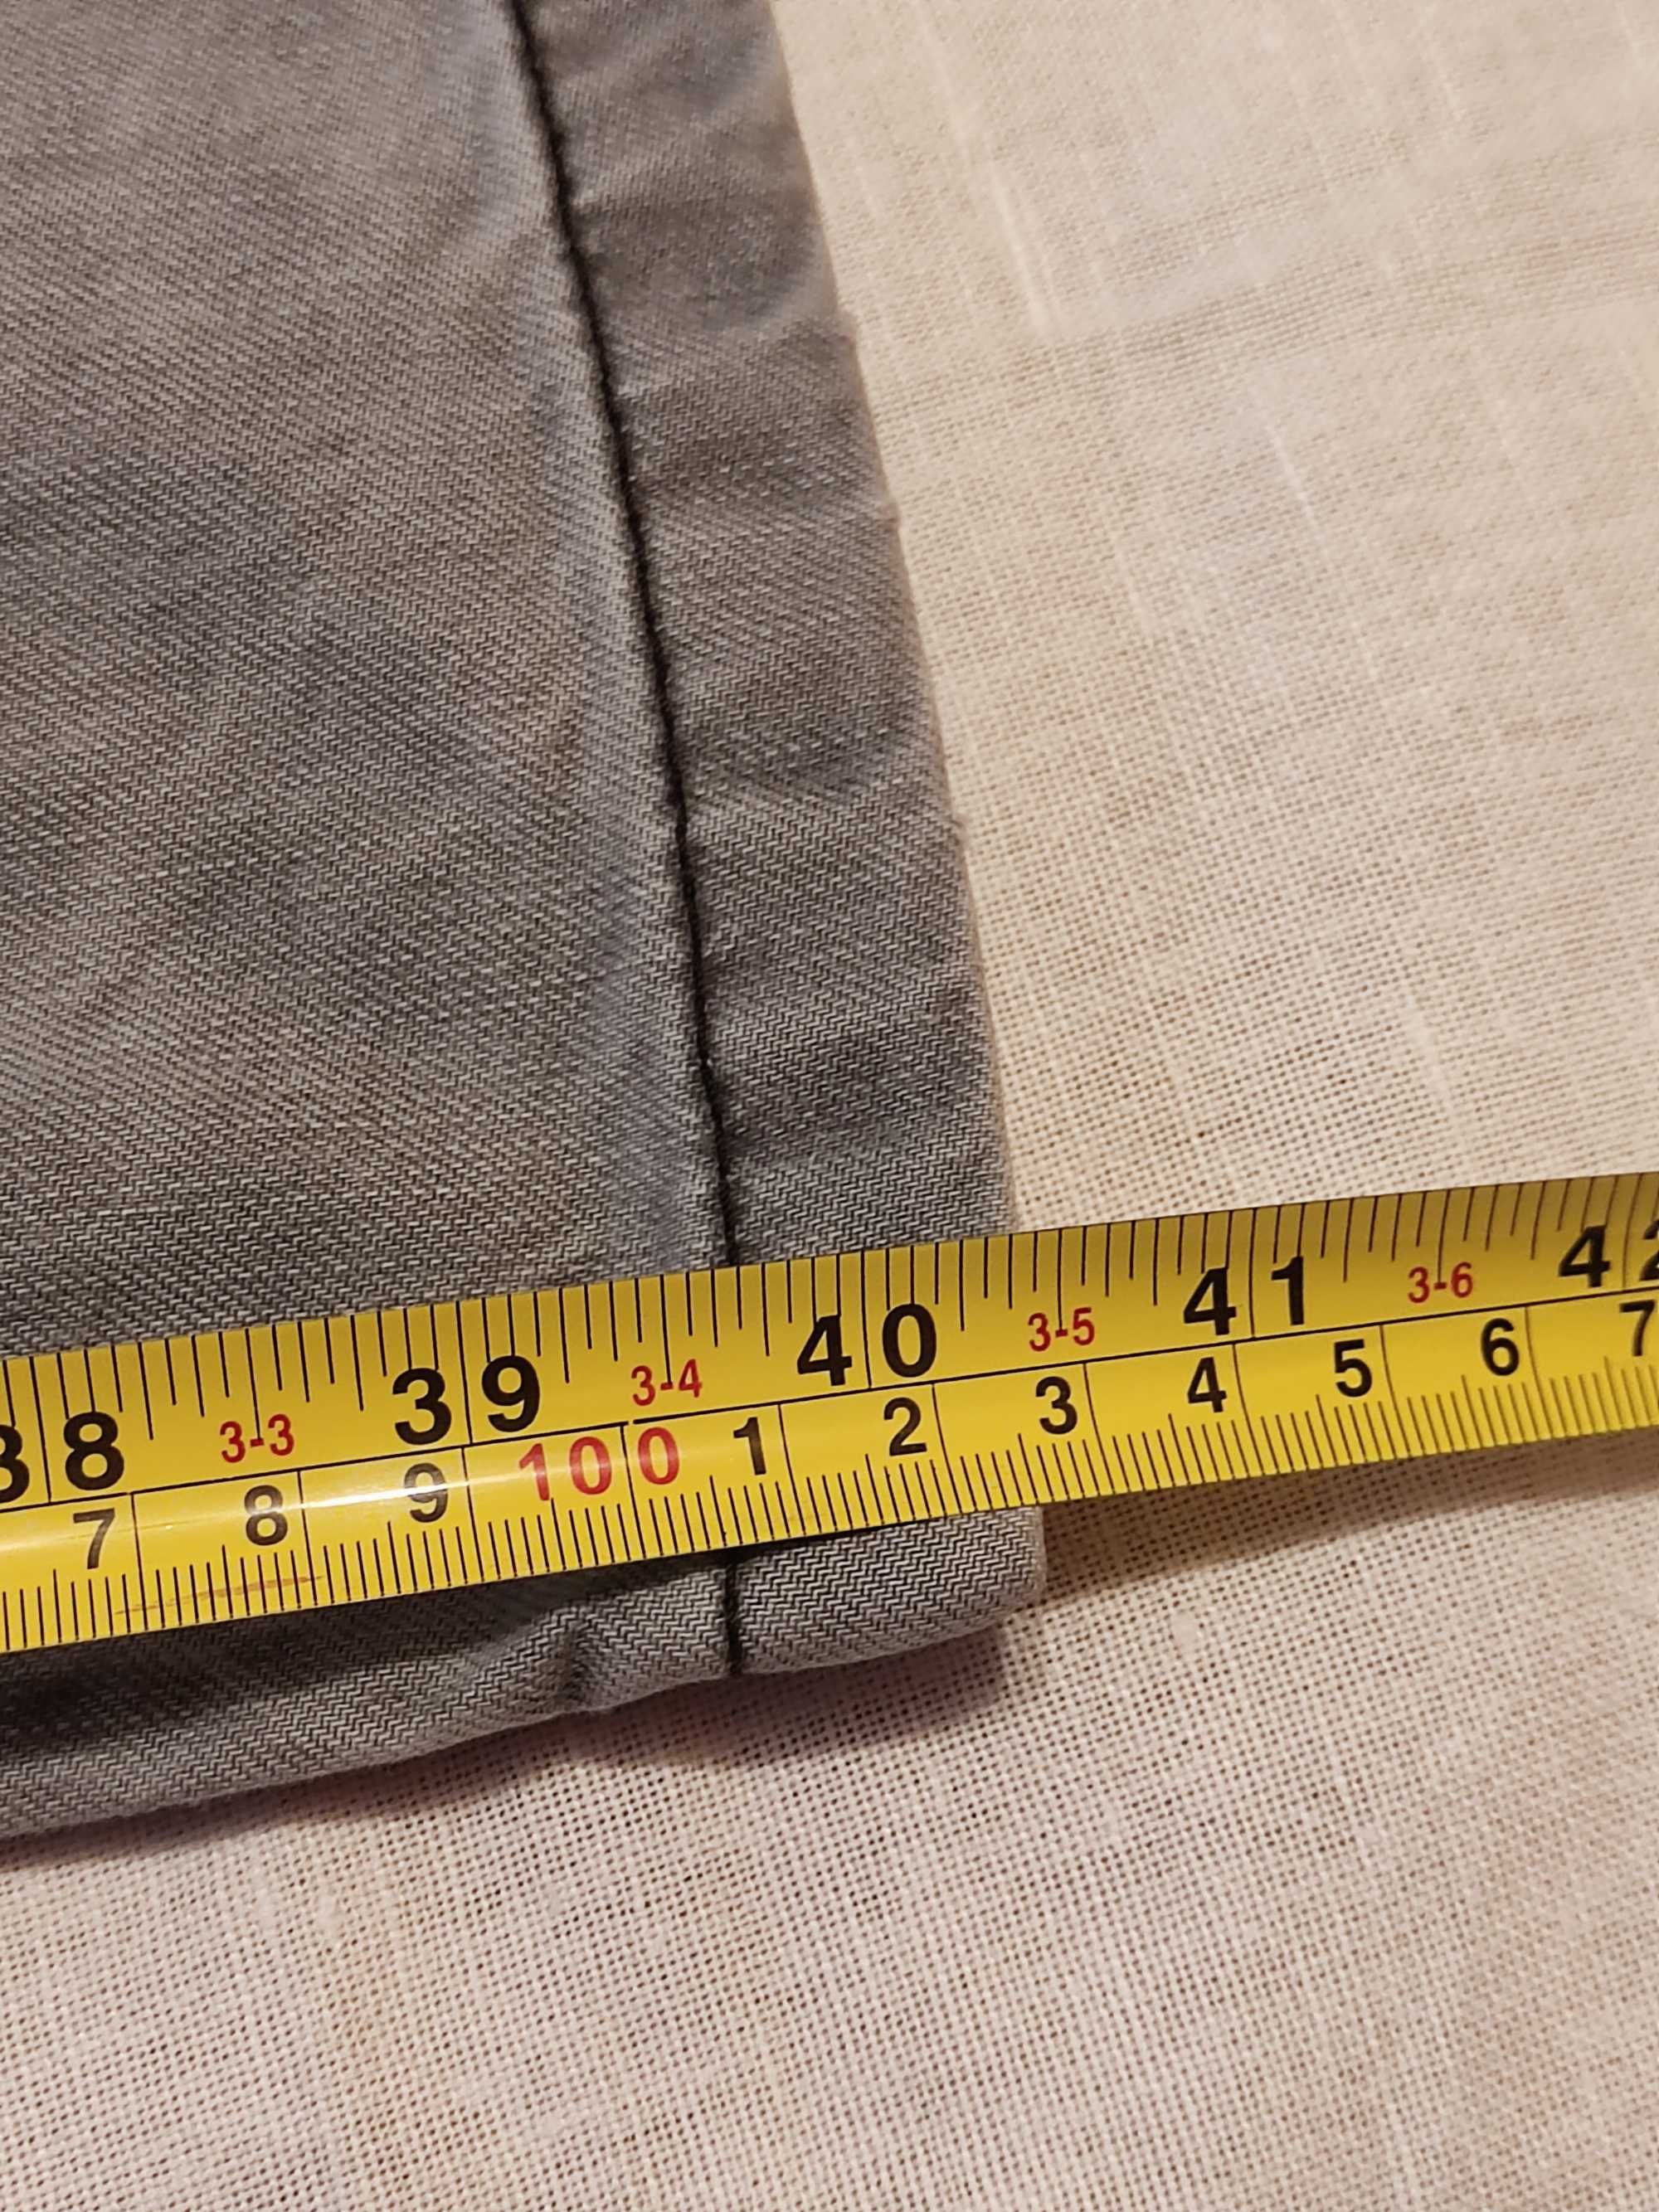 Pantaloni ENGELBERT STRAUSS blugi jeans 48cm talie salopeta munca